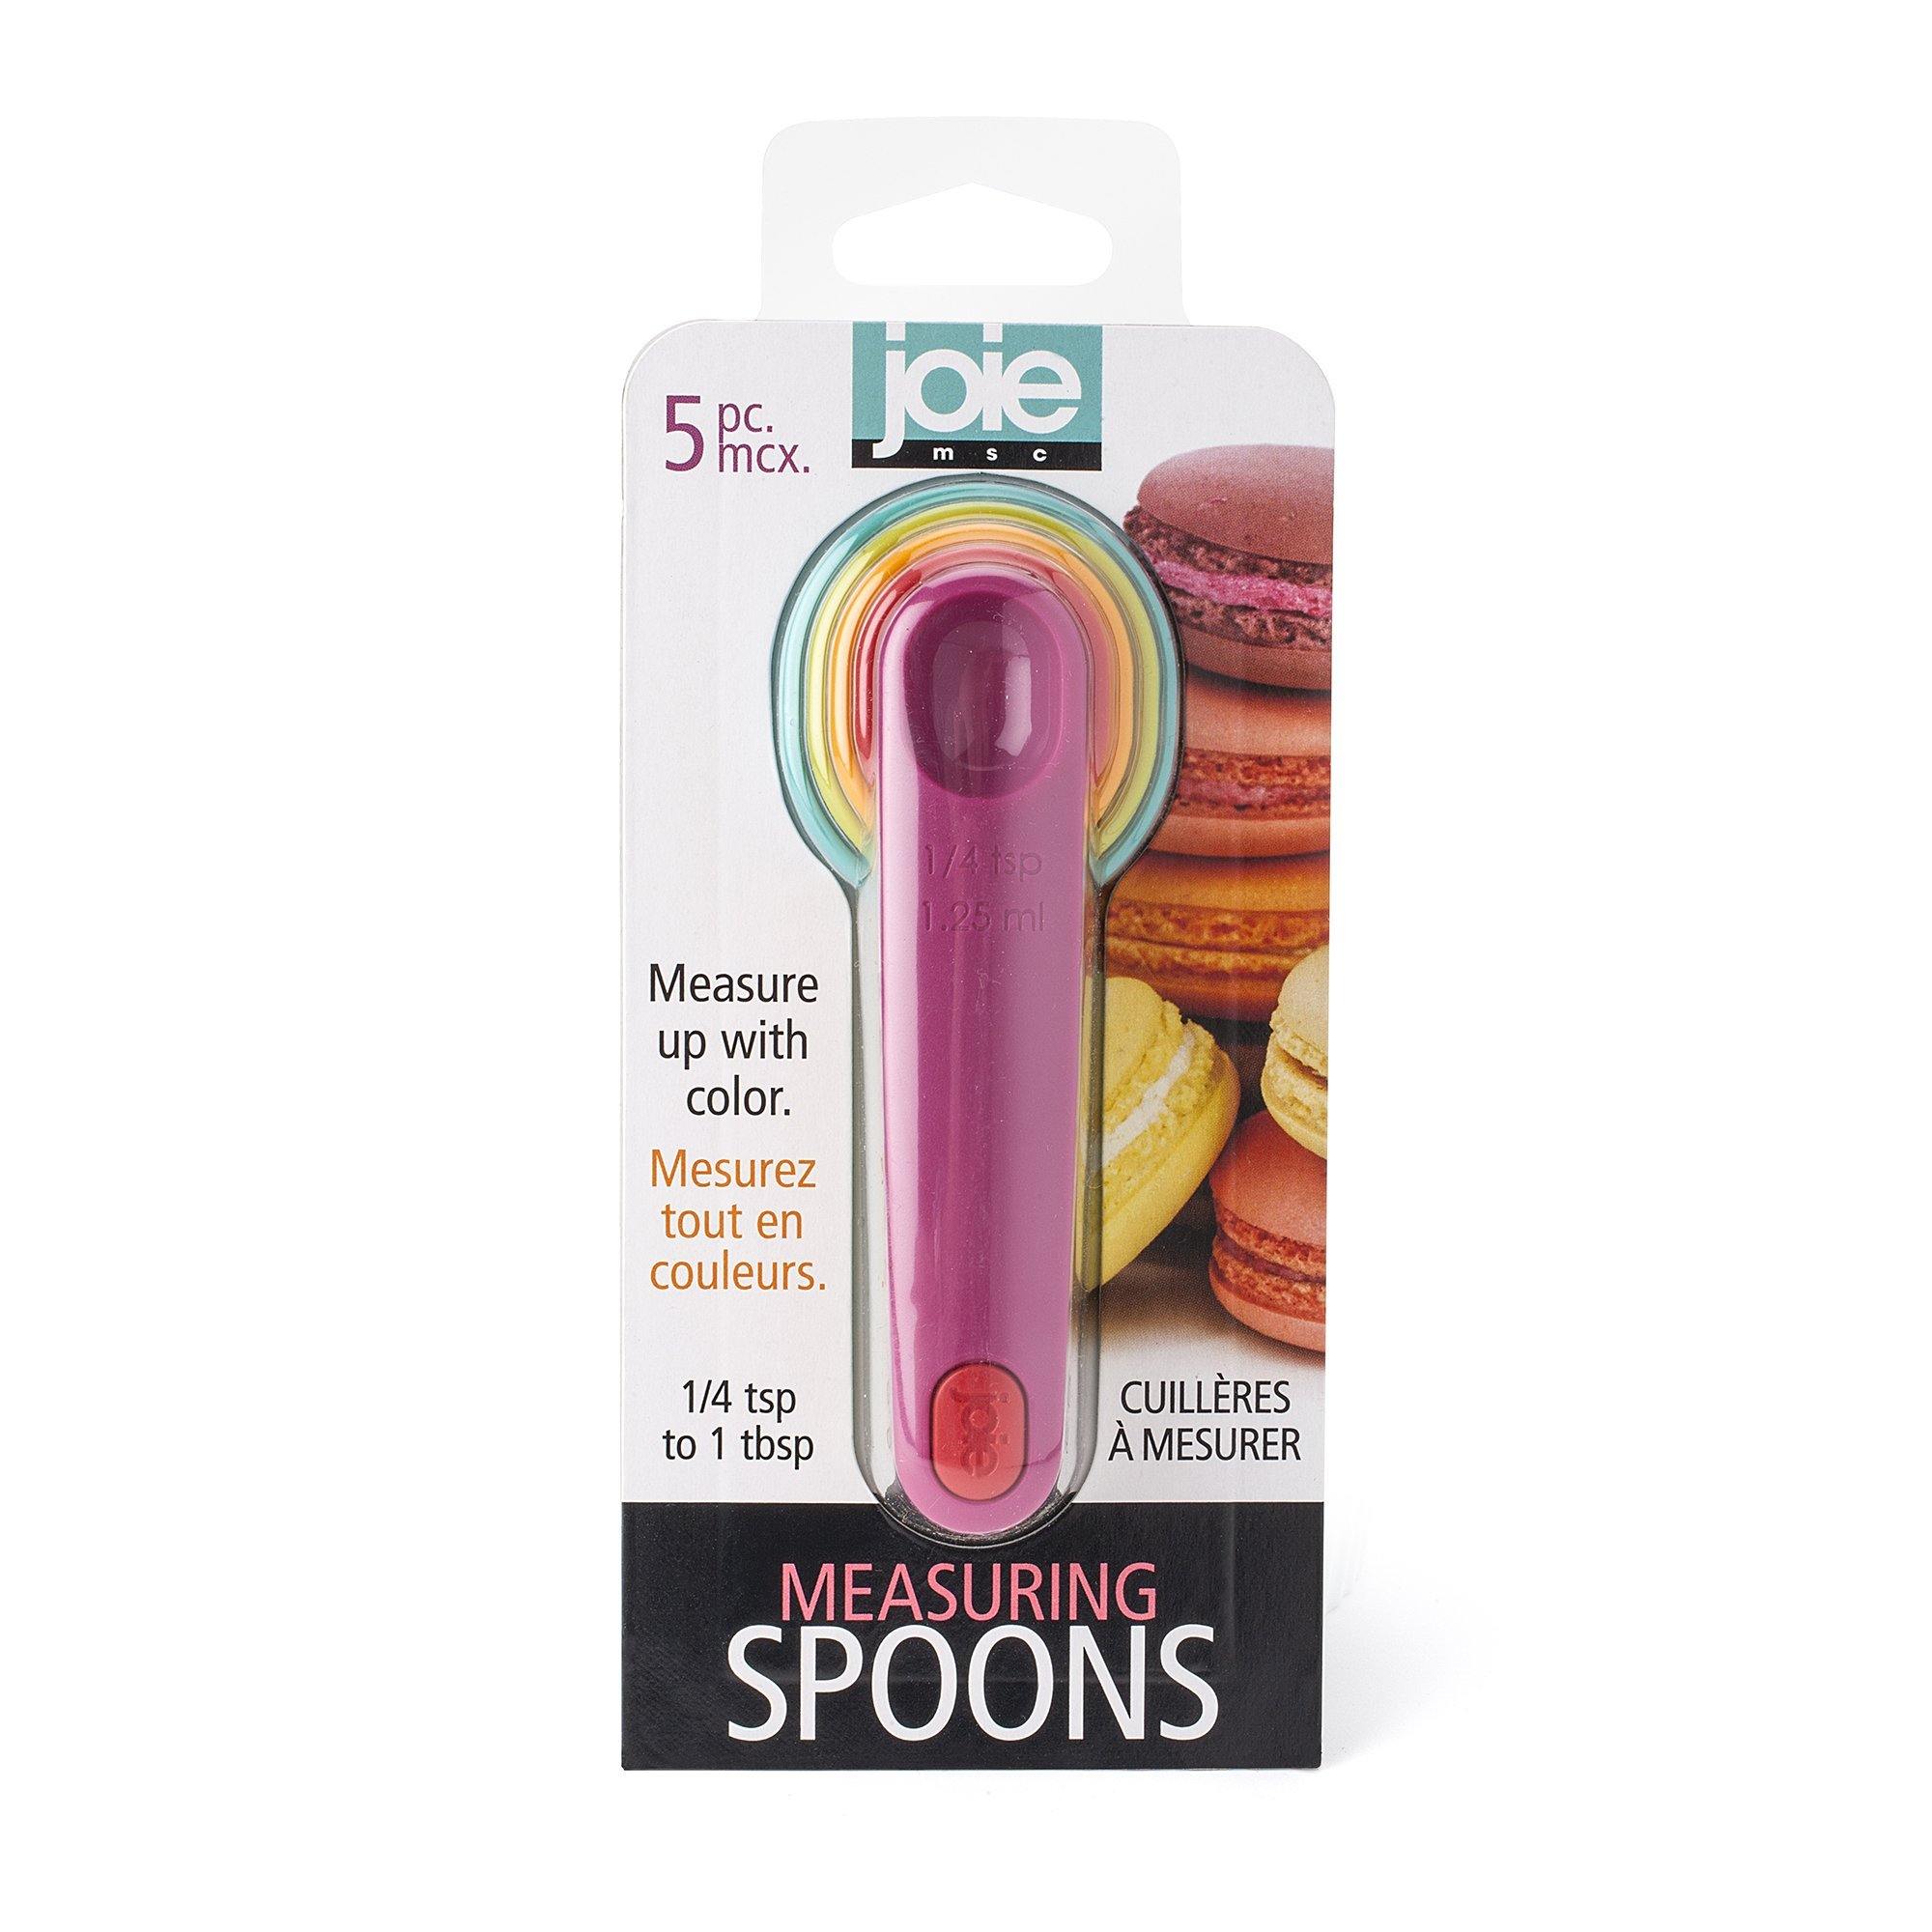 Joie MSC Measuring Spoons - Dollar Max Depot